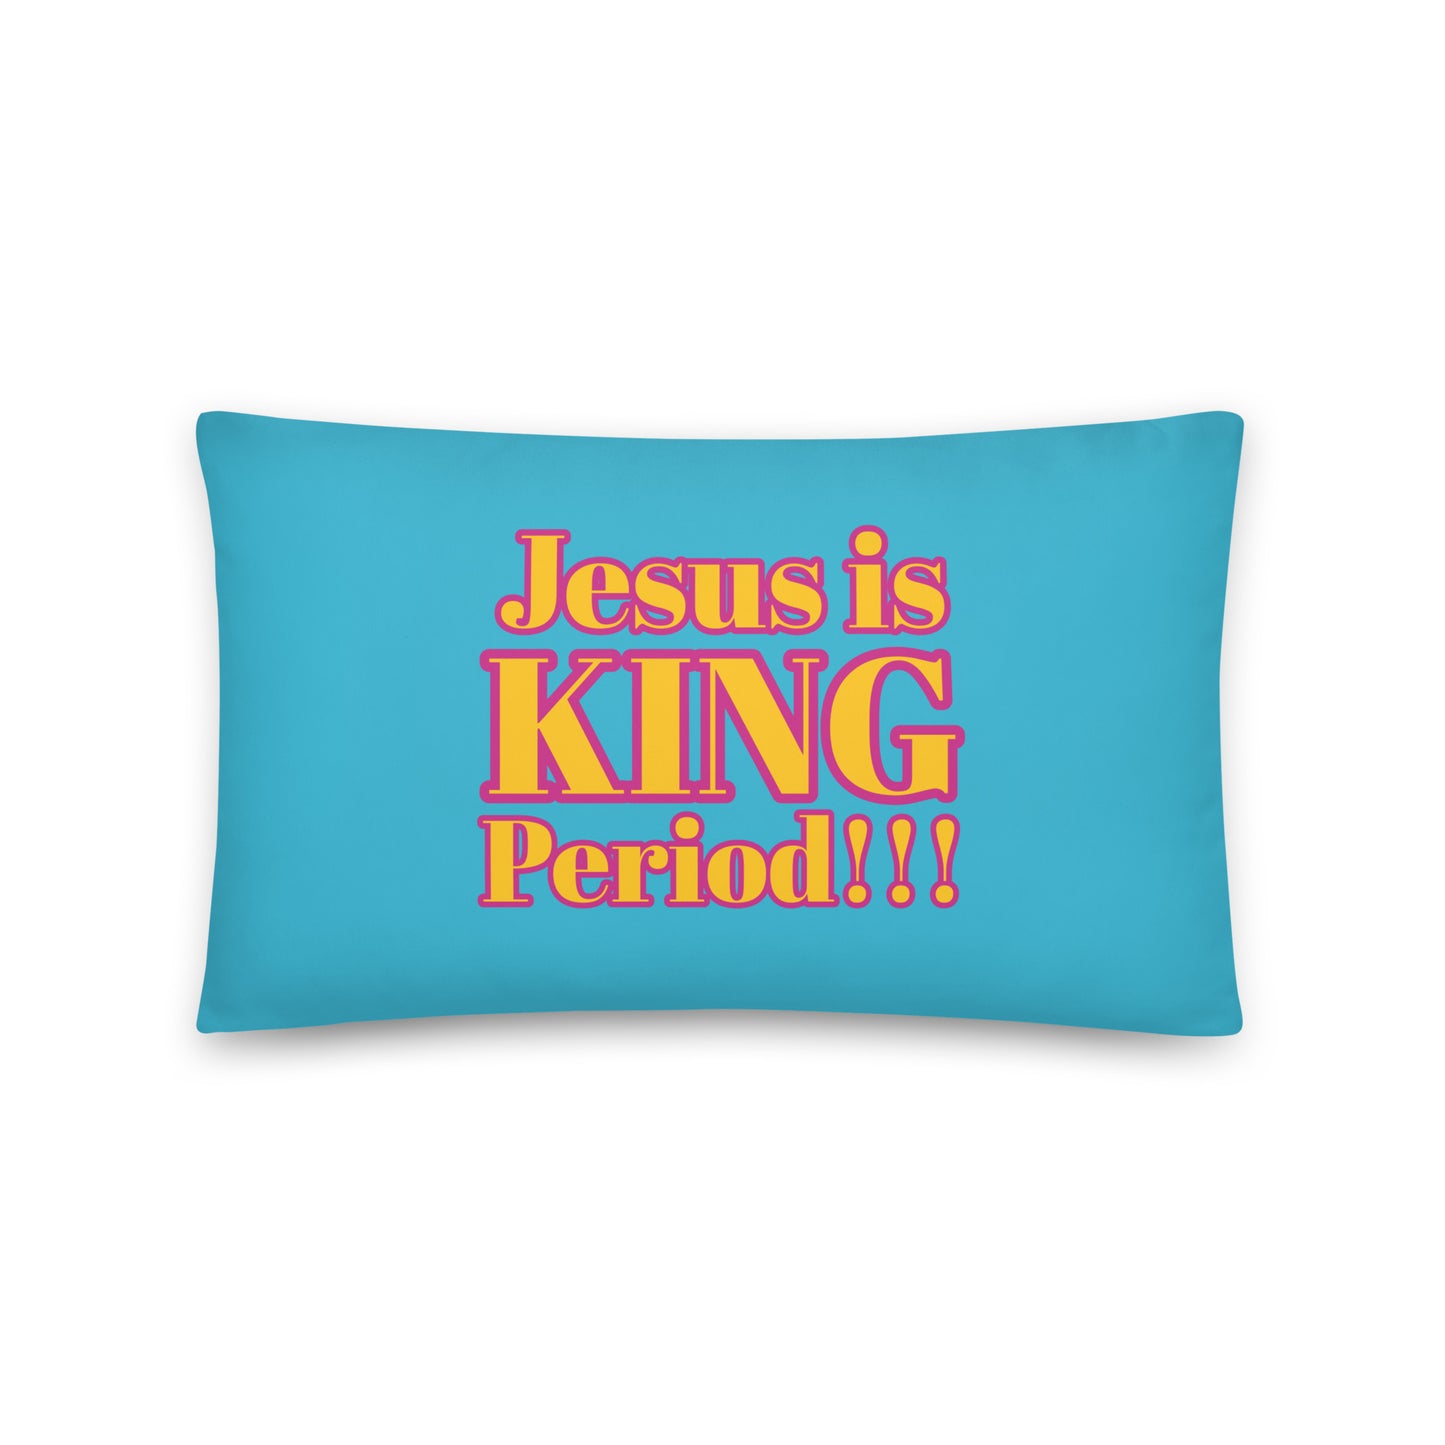 Jesus is King period!!! Basic Pillow